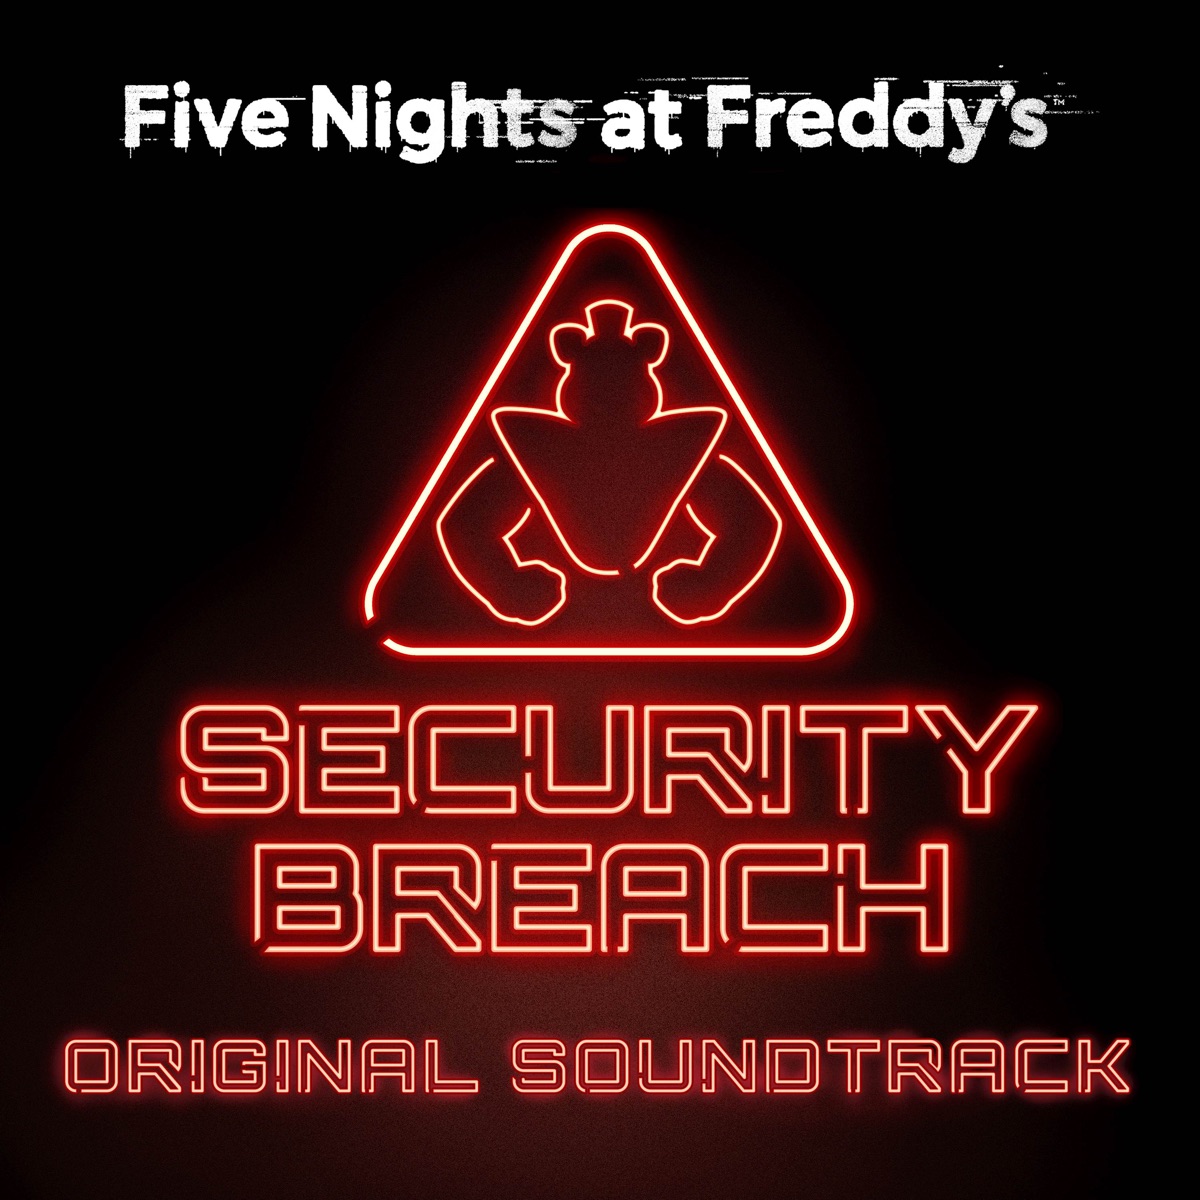 Five Nights at Freddy's: Security Breach em promoção